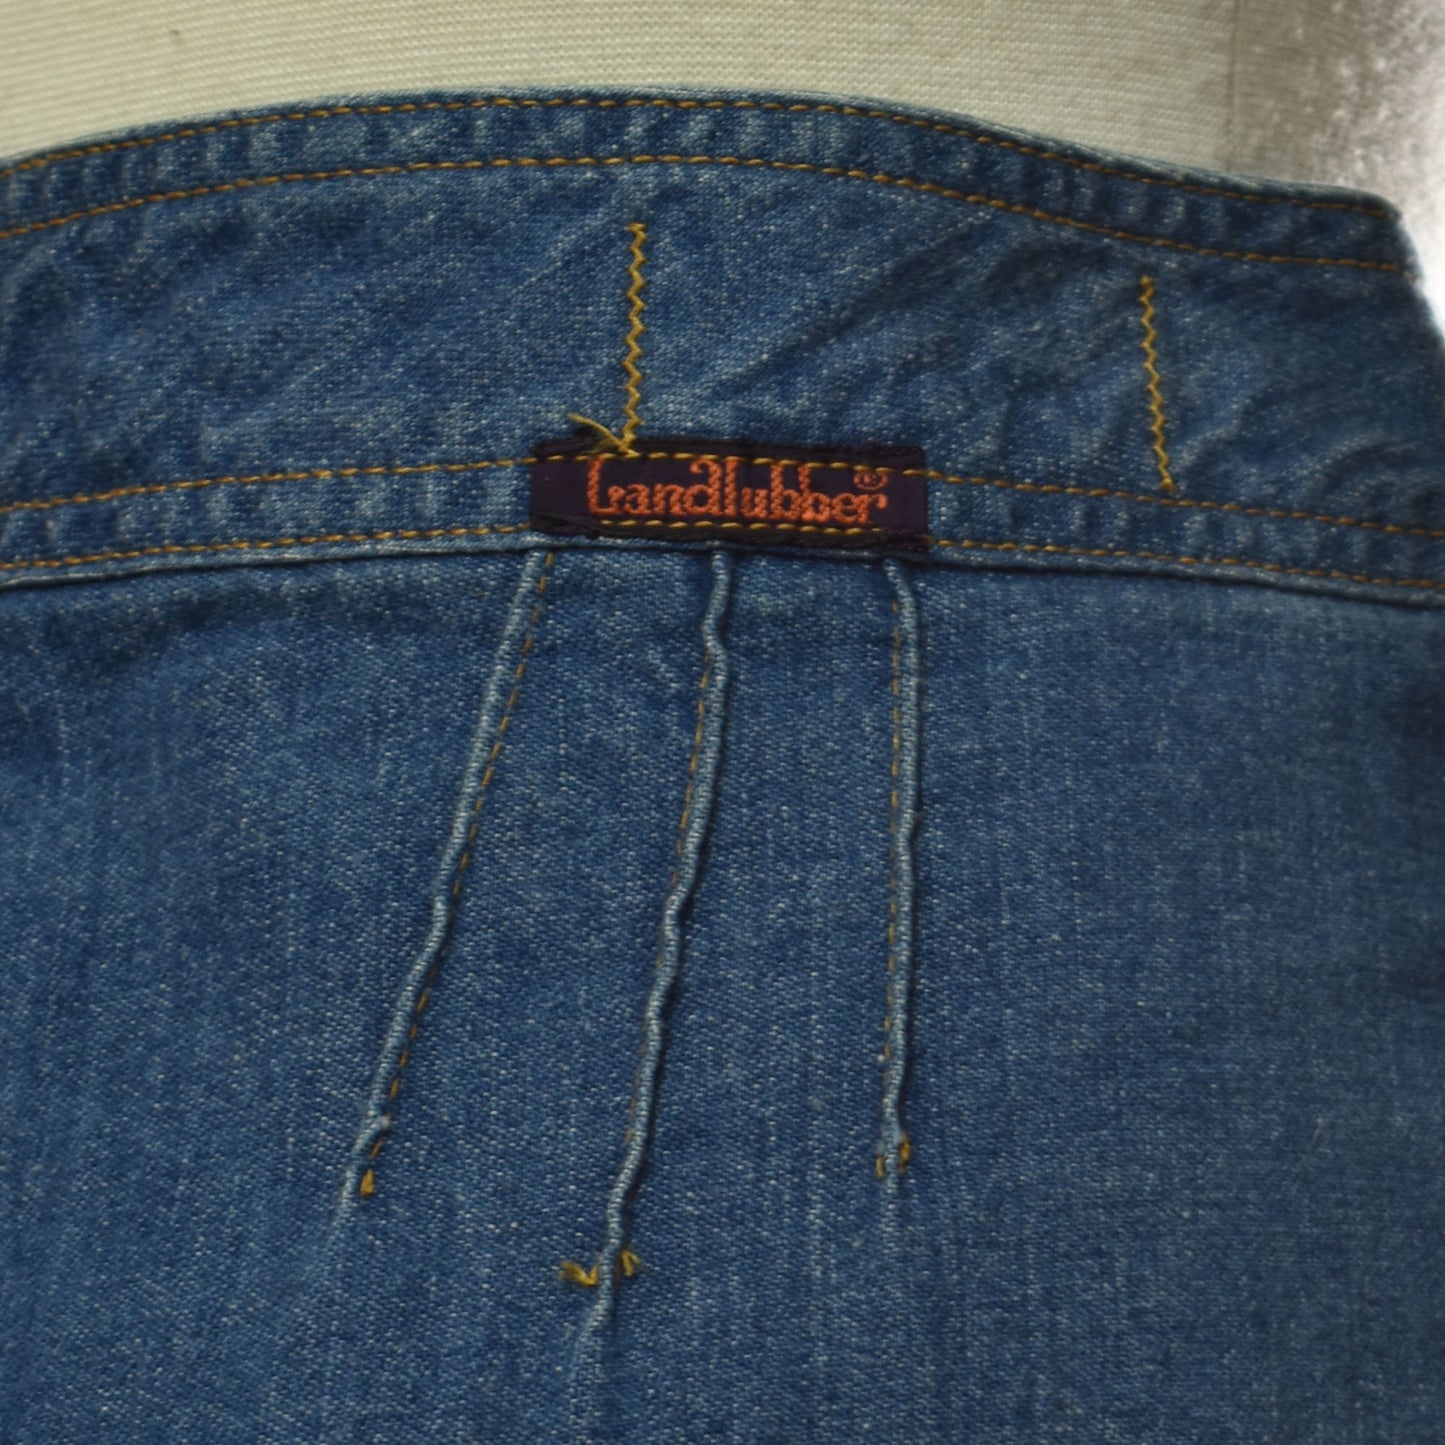 Vintage 70s Denim Shorts - Landlubber Brand - 27" Waist - Talon Zipper Made in USA